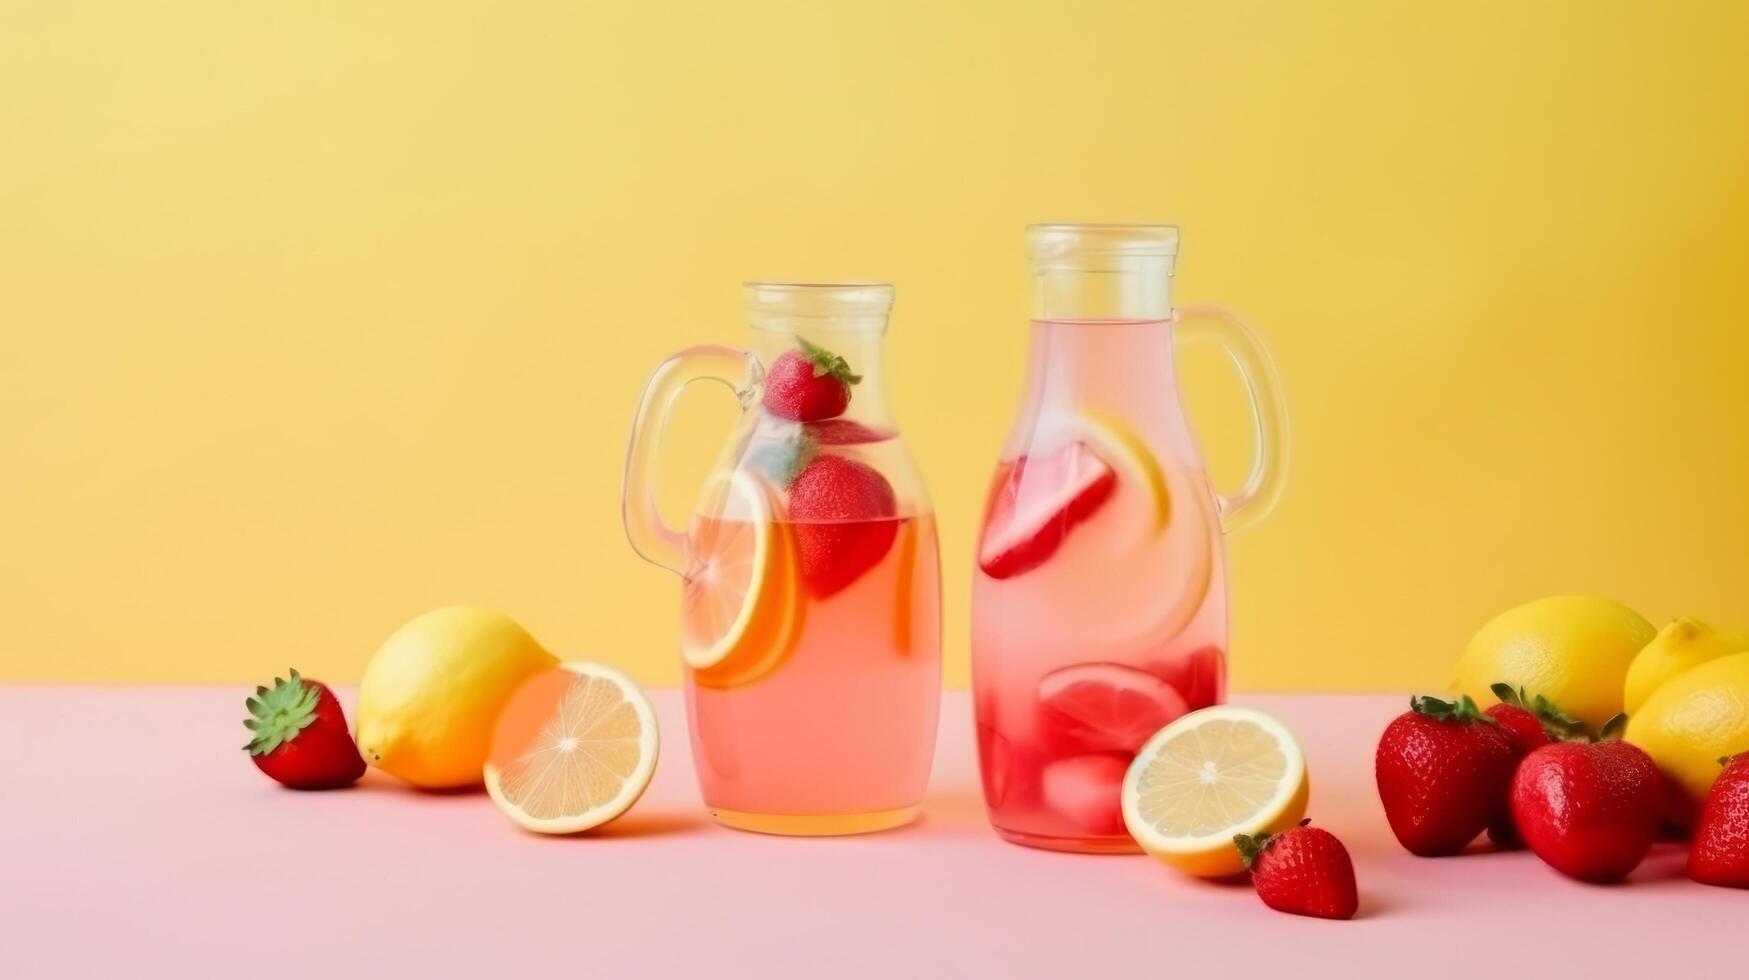 Strawberry lemonade. Illustration photo